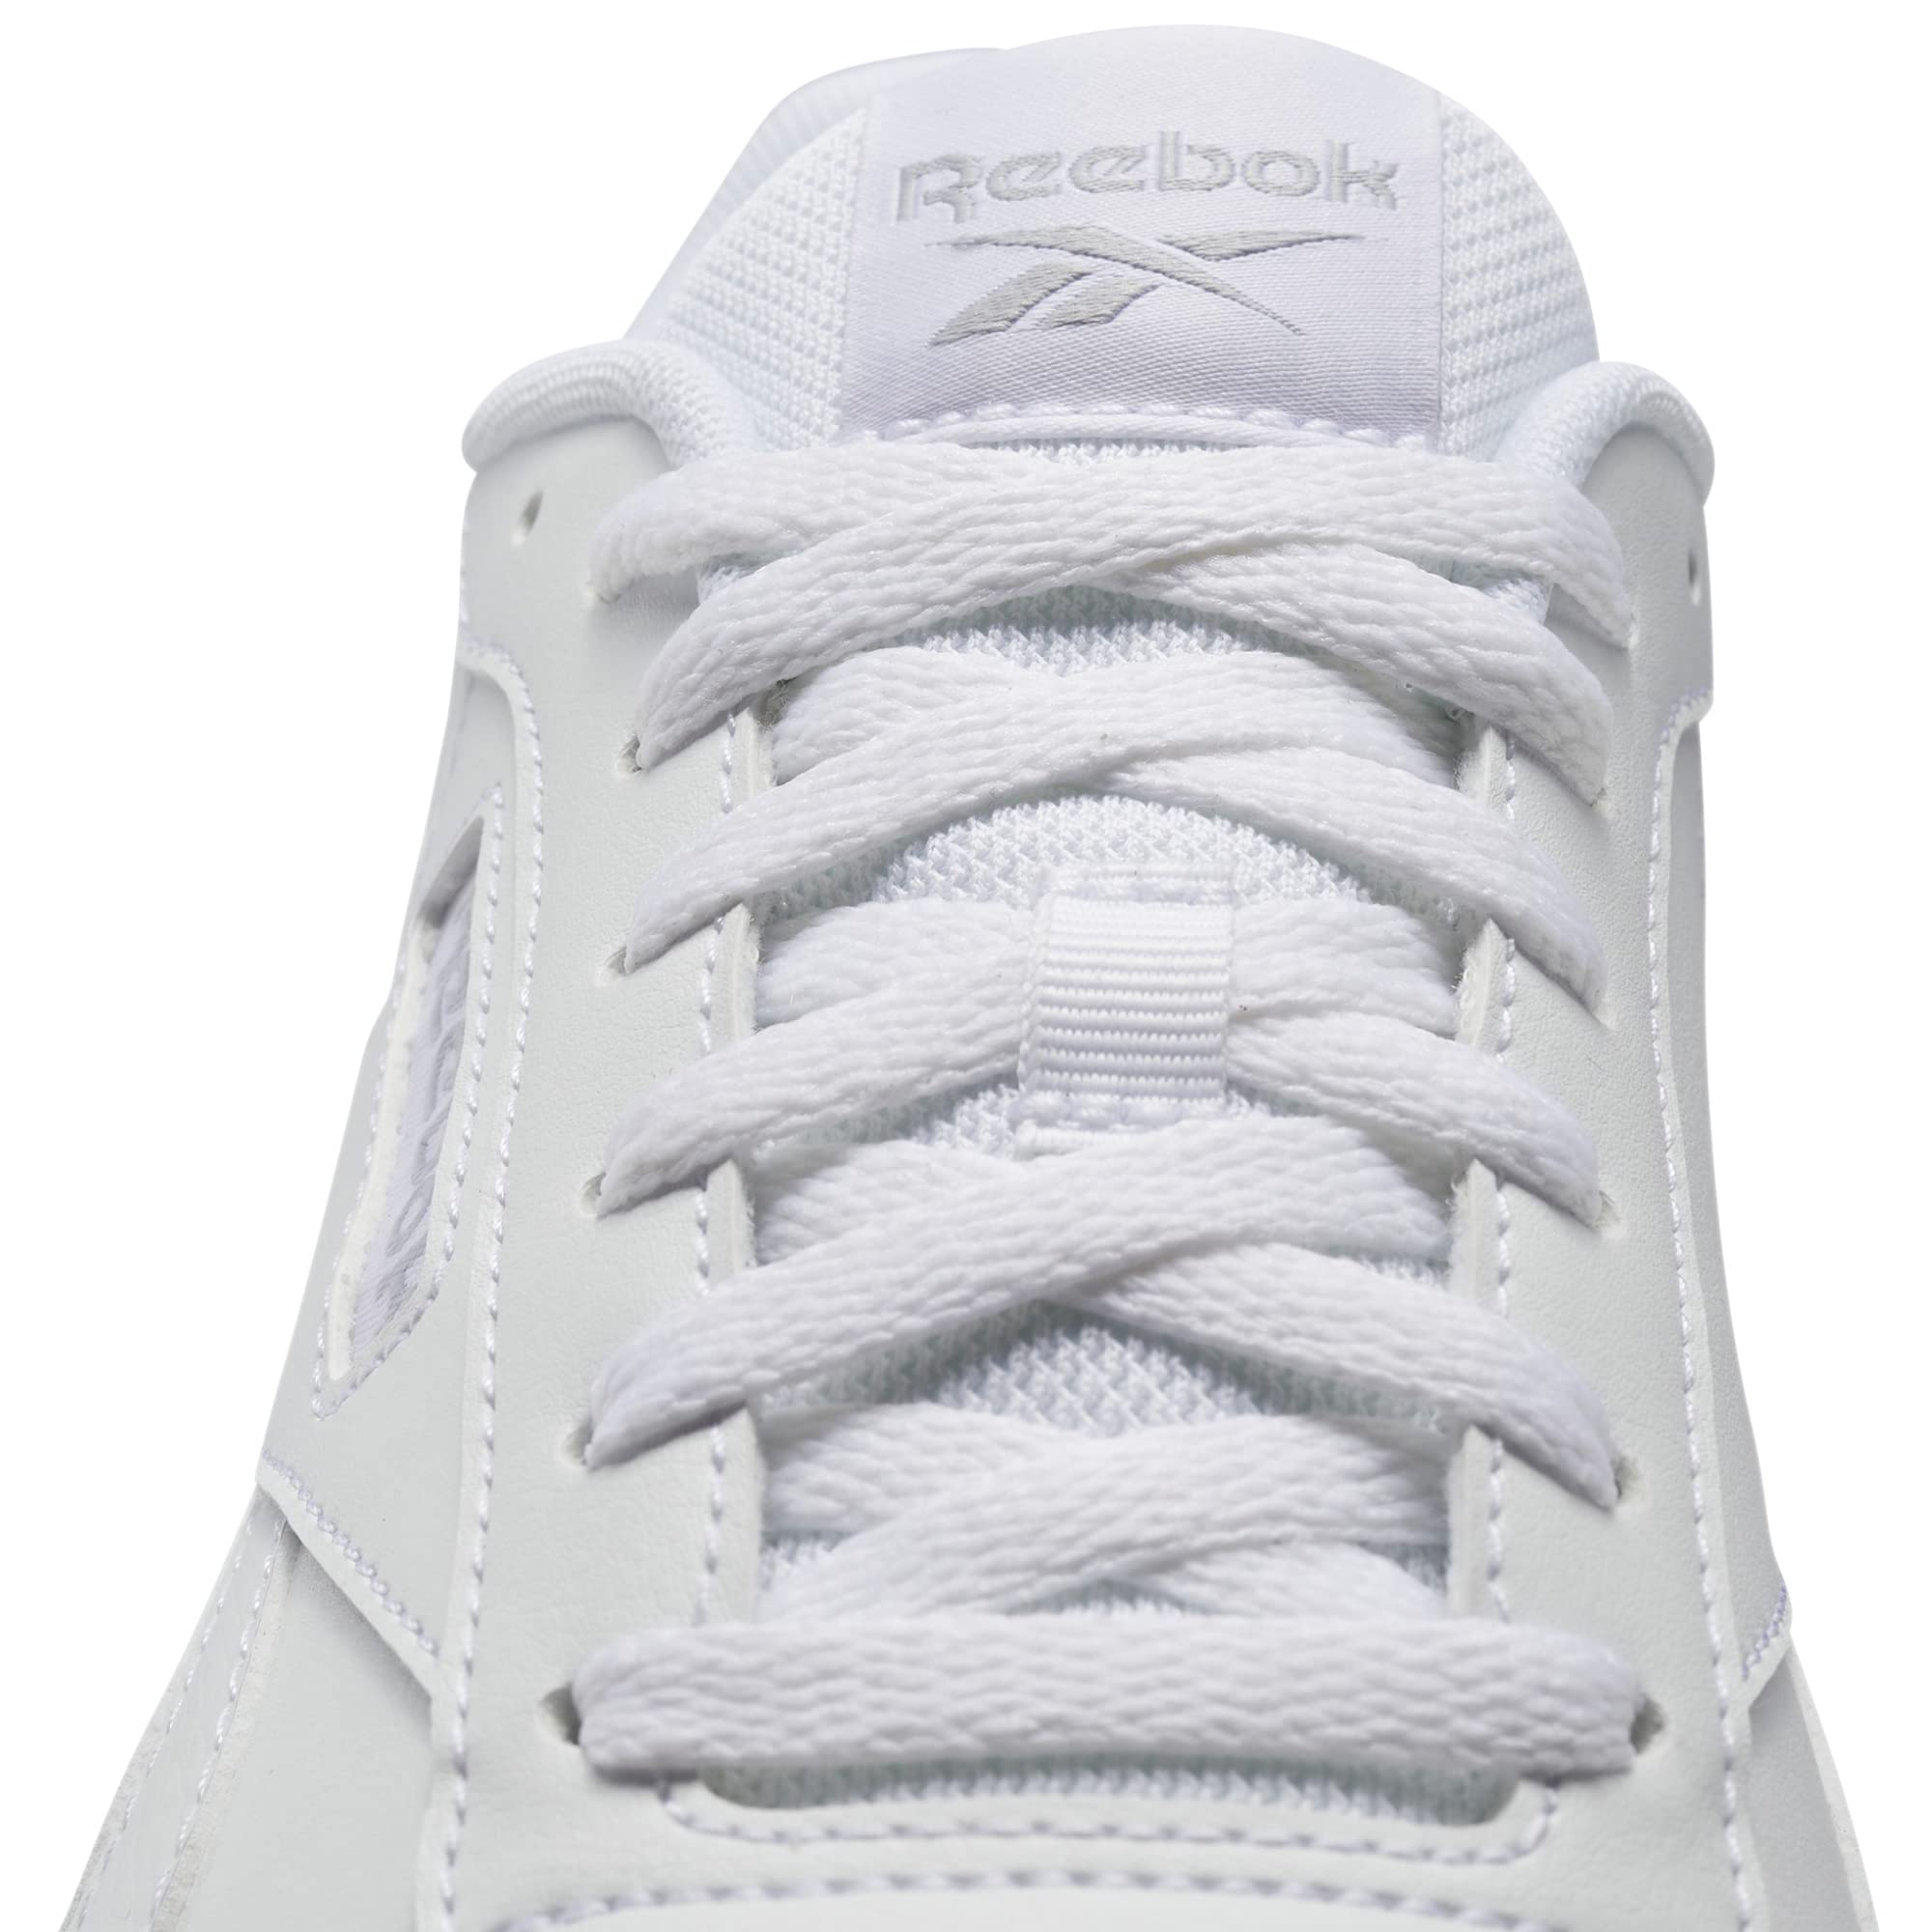 Reebok Unisex-Adult Court Advance Sneaker